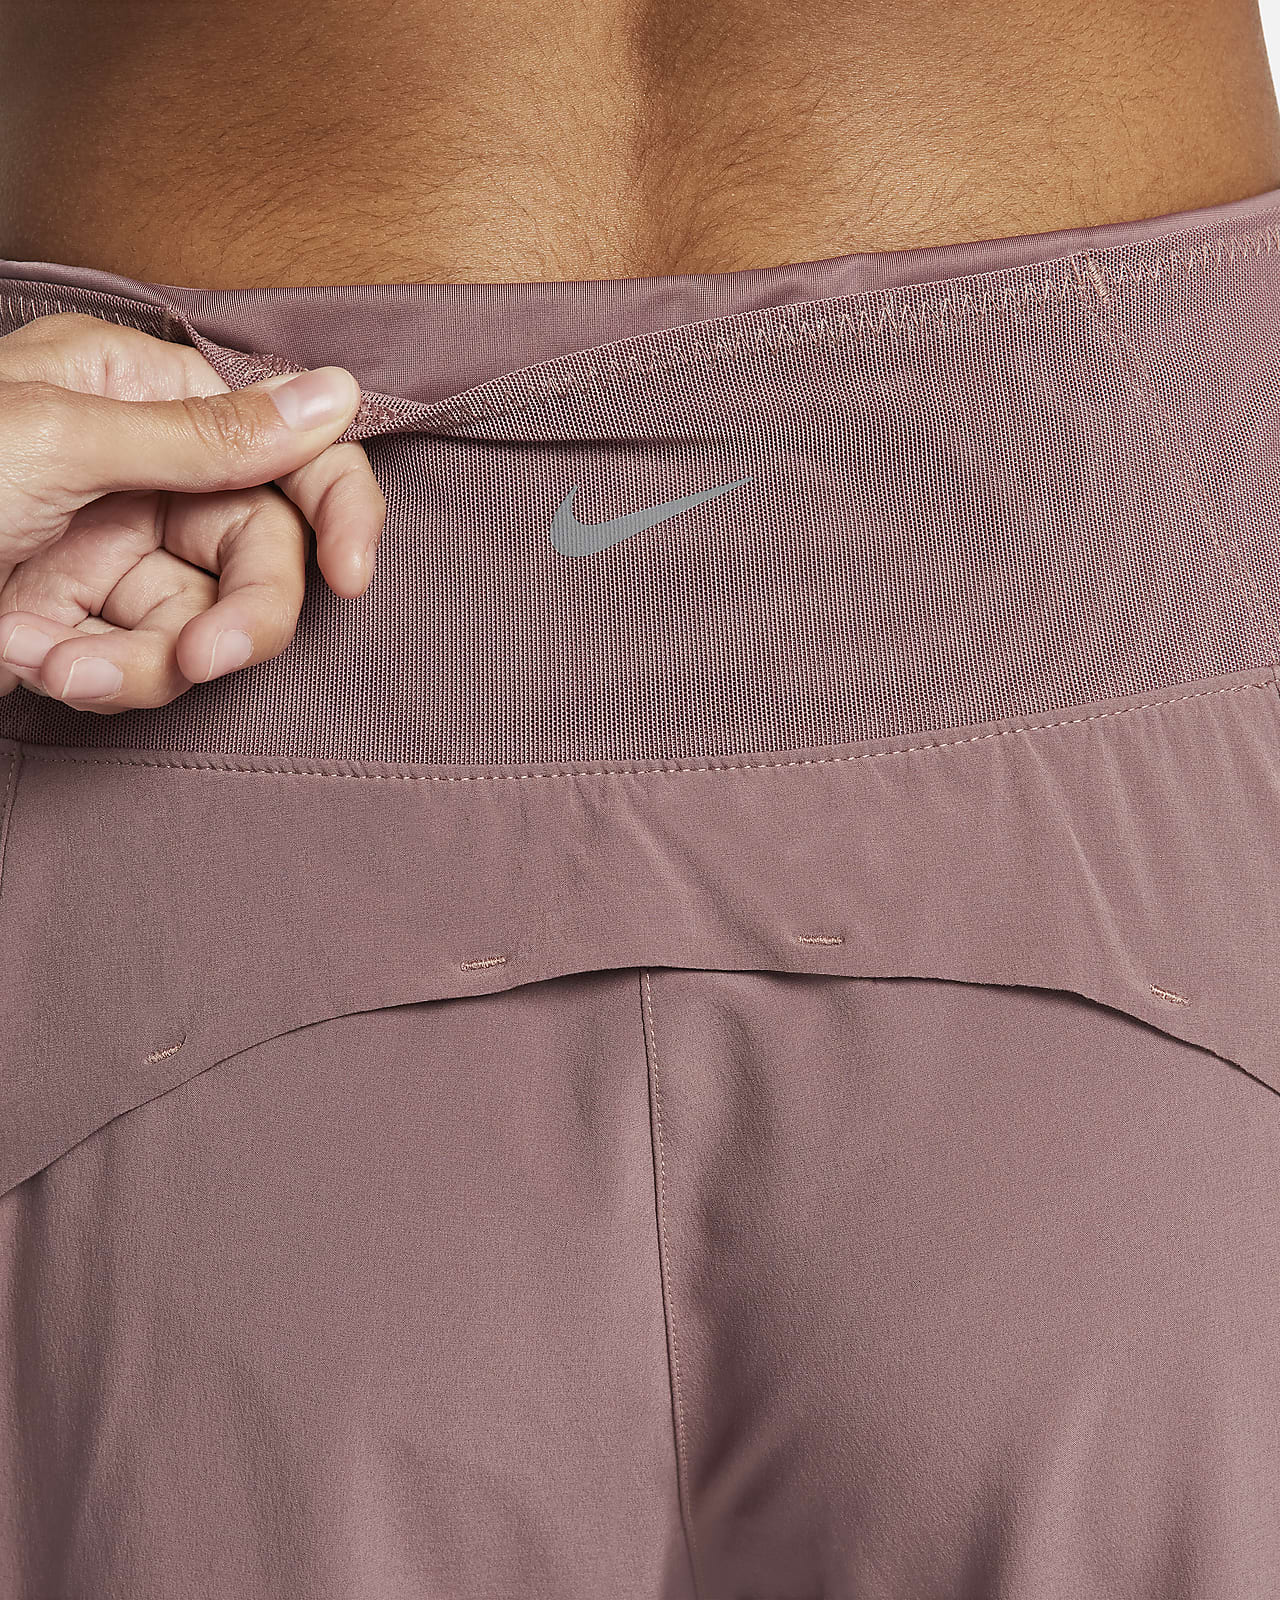 Nike Swift Women's Running Pants (iron Grey)